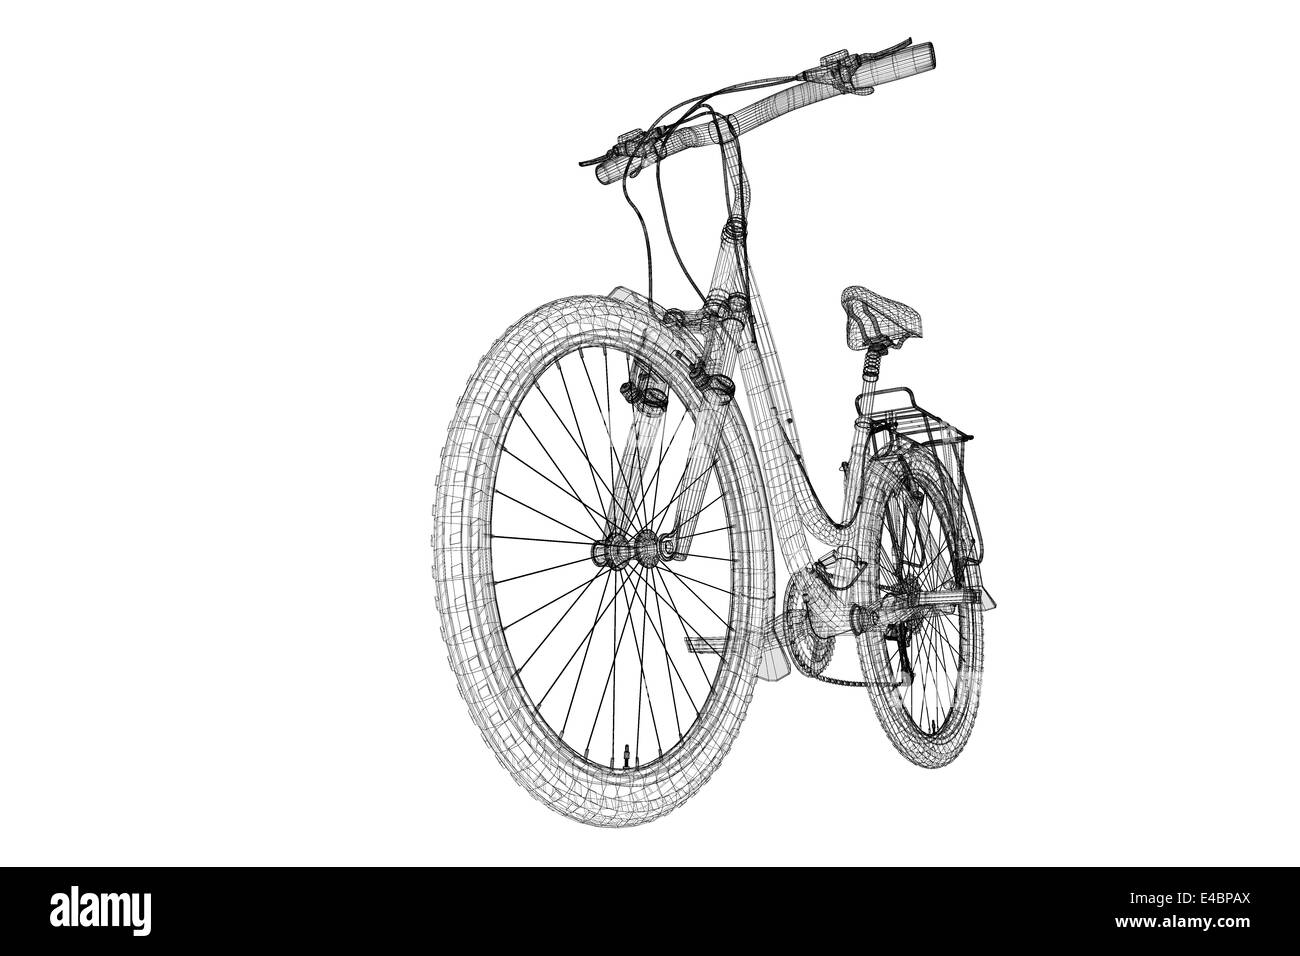 Mountainbike Fahrrad 3D Modell, Karosseriestruktur, Drahtmodell  Stockfotografie - Alamy